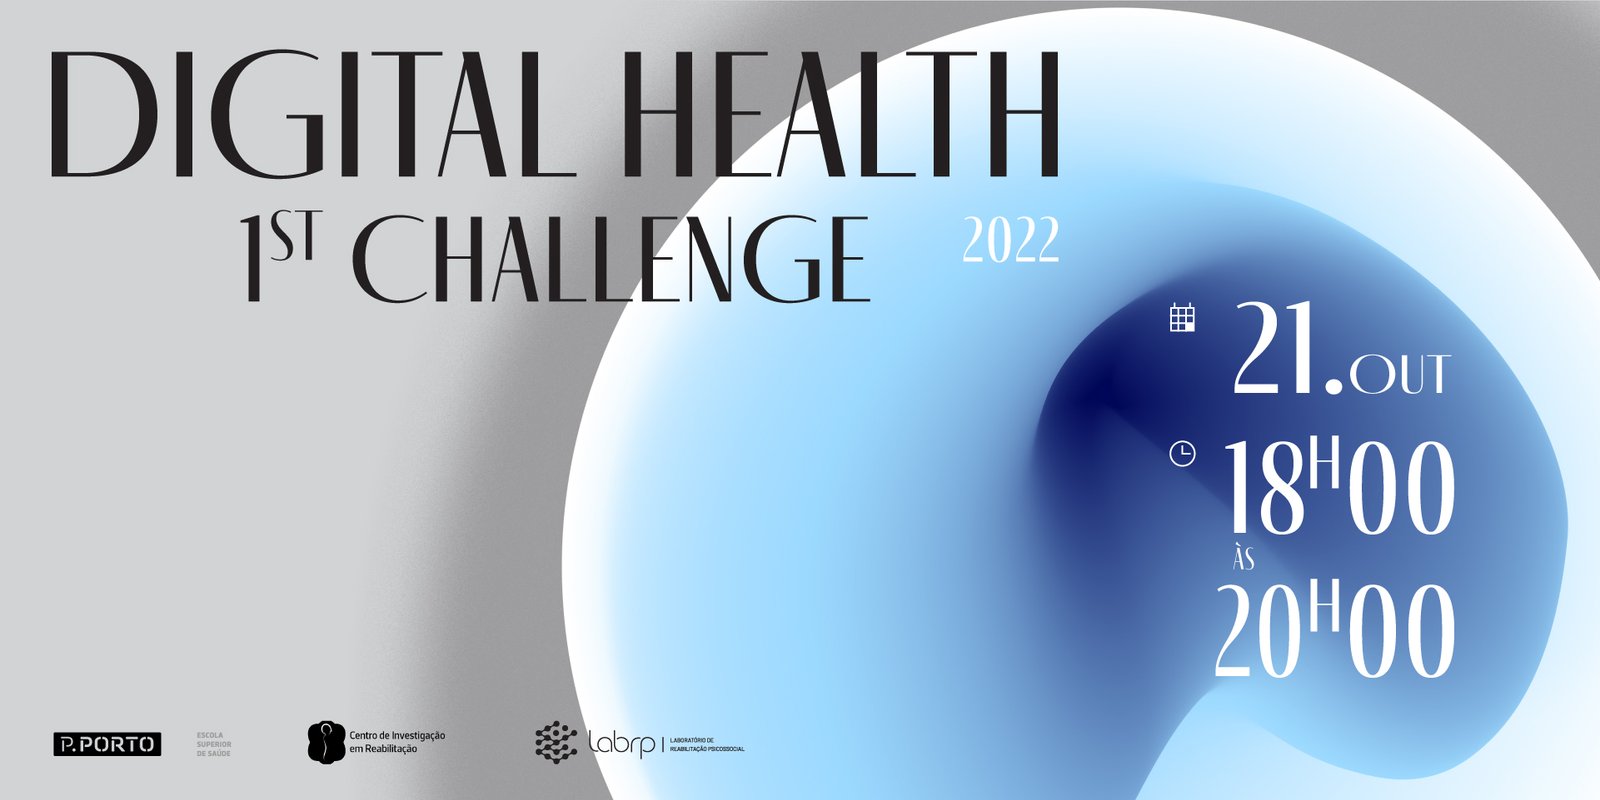 Digital Health 2022 1St Challenge